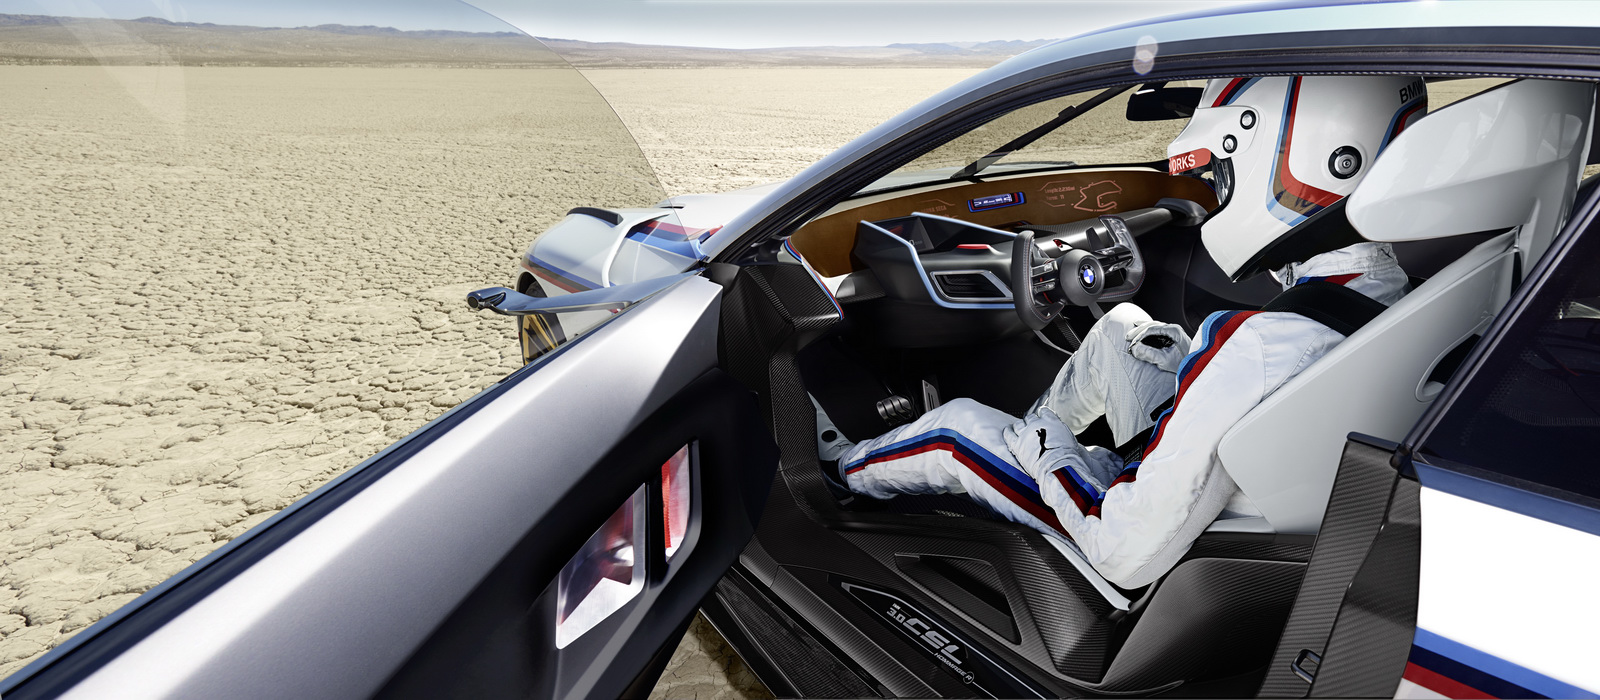 BMW 3.0 CSL Hommage R Concept, 2015